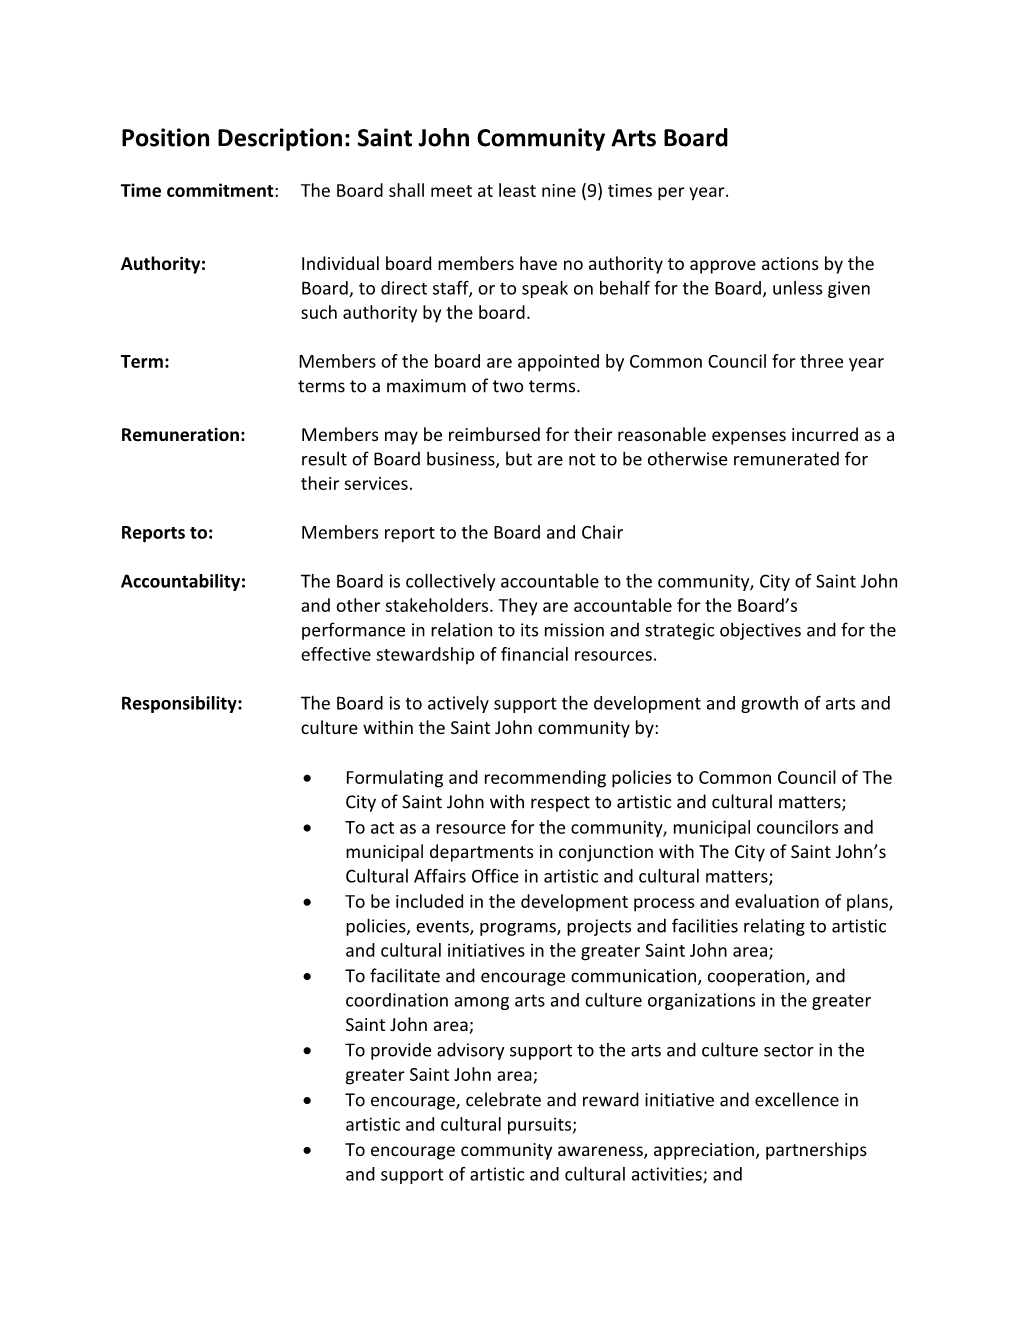 Sample Template - Board Member Job Description and Role